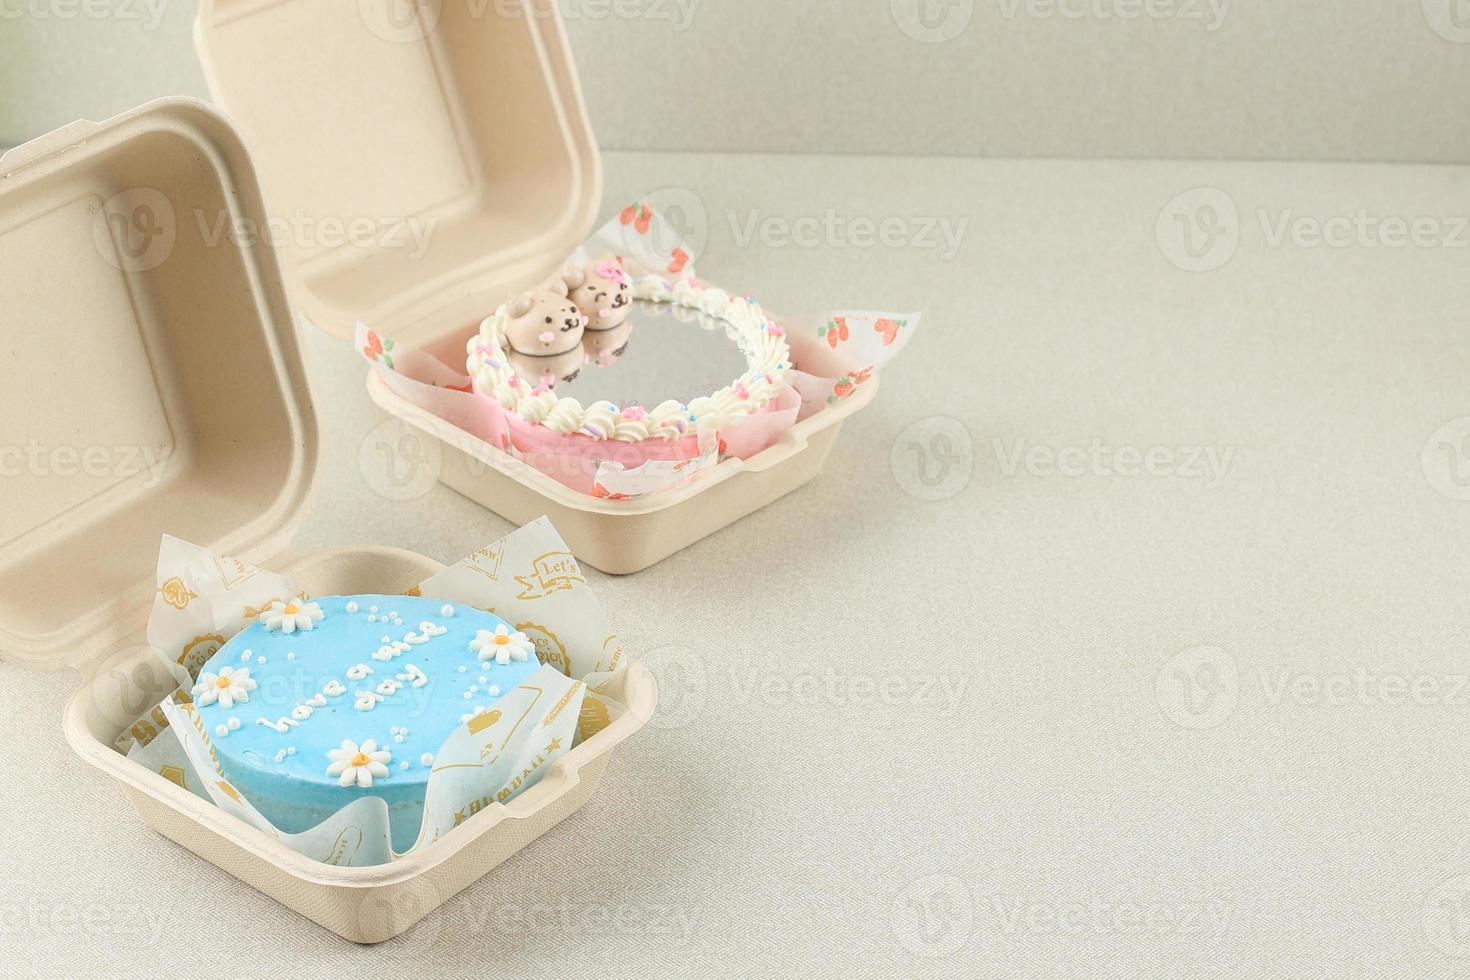 Korean Lunch Box Cake for Valentine Days photo